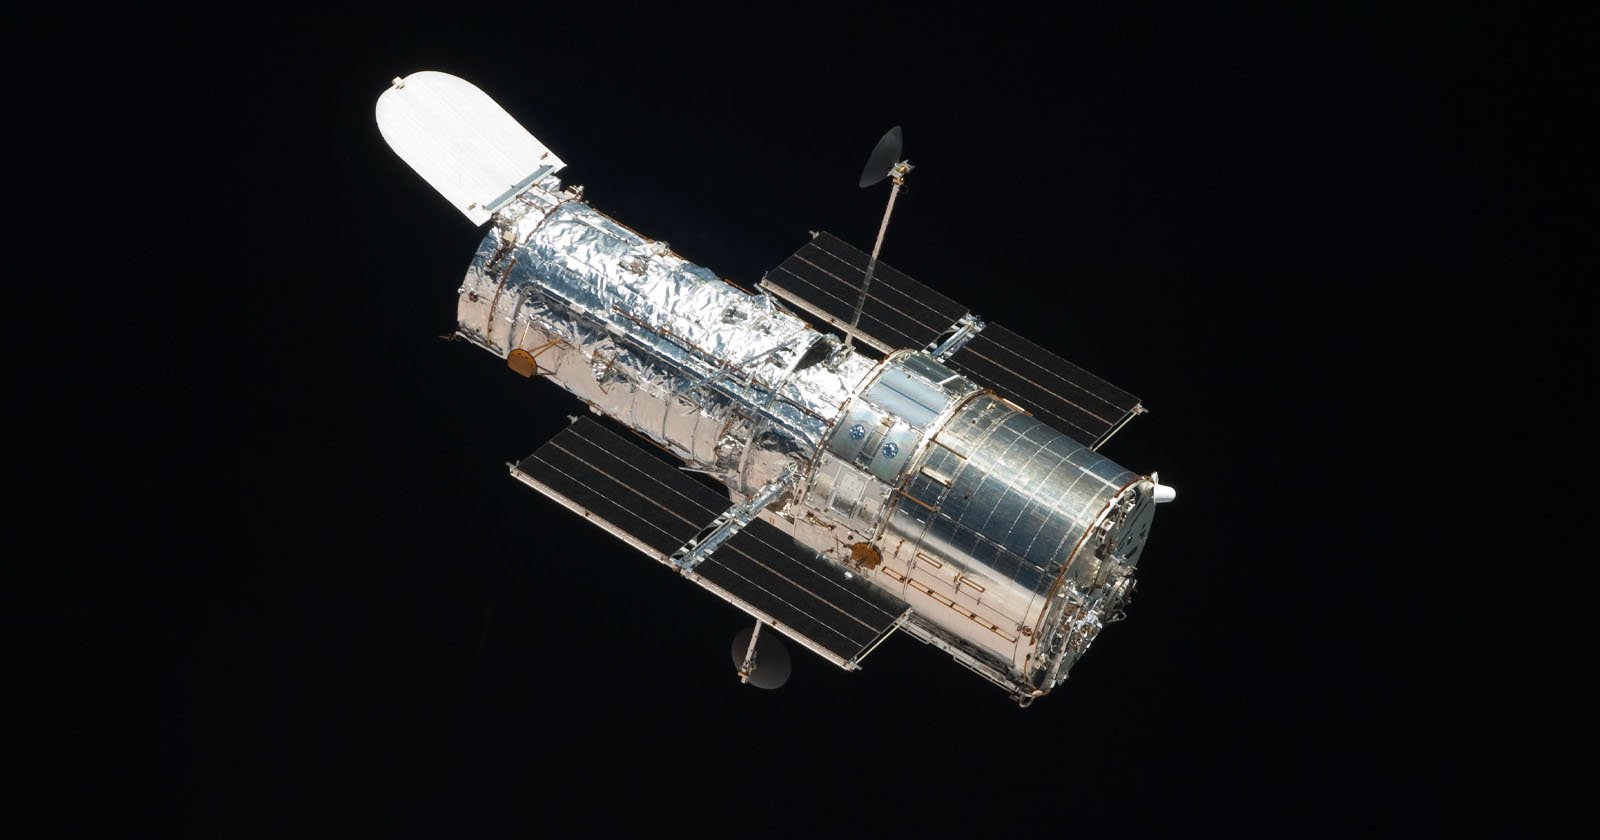 The Hubble Space telescope